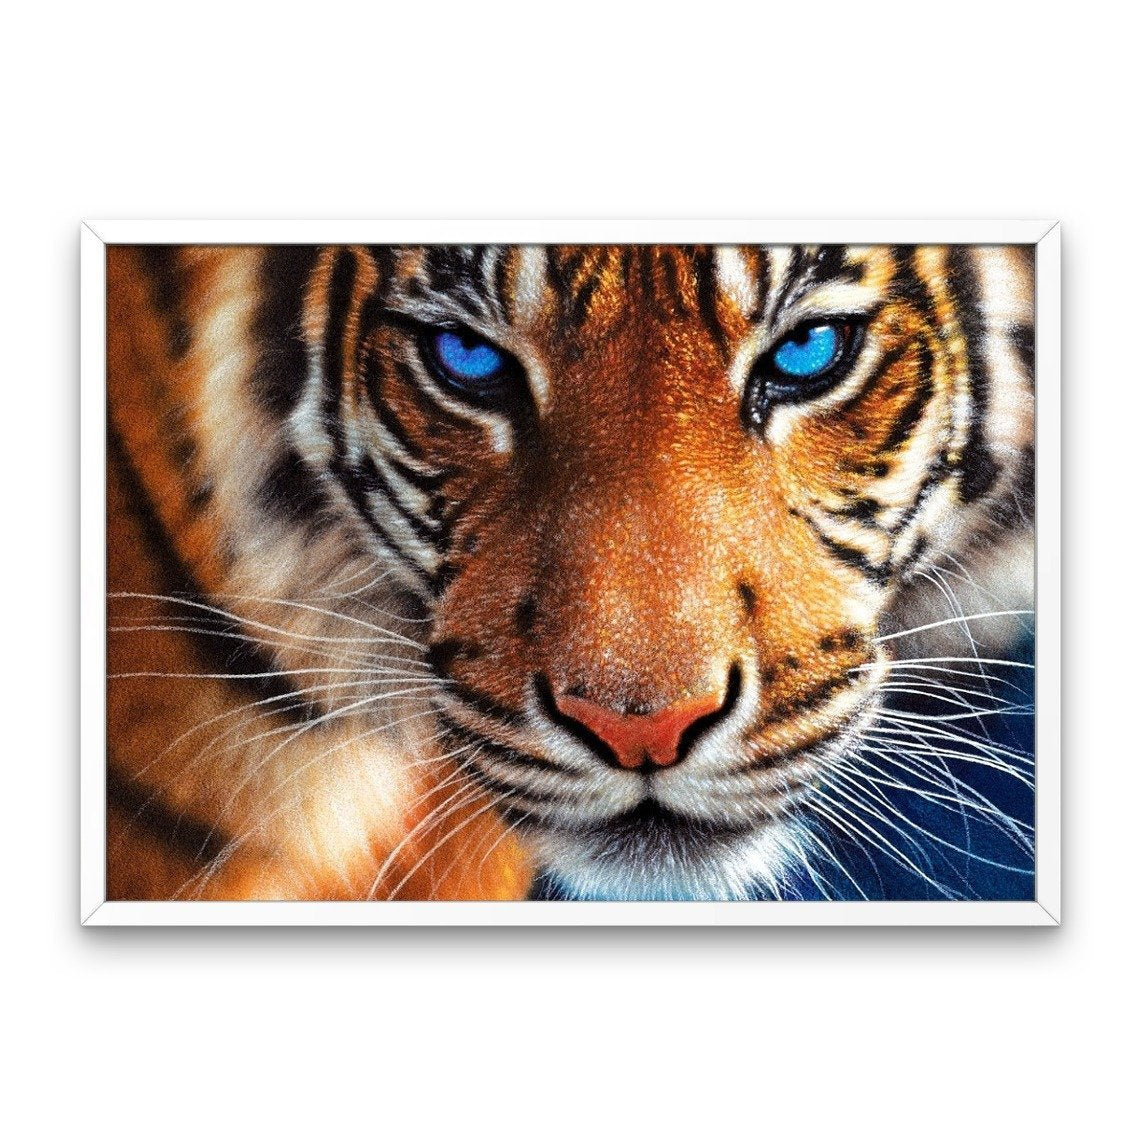 Tiger Close-up